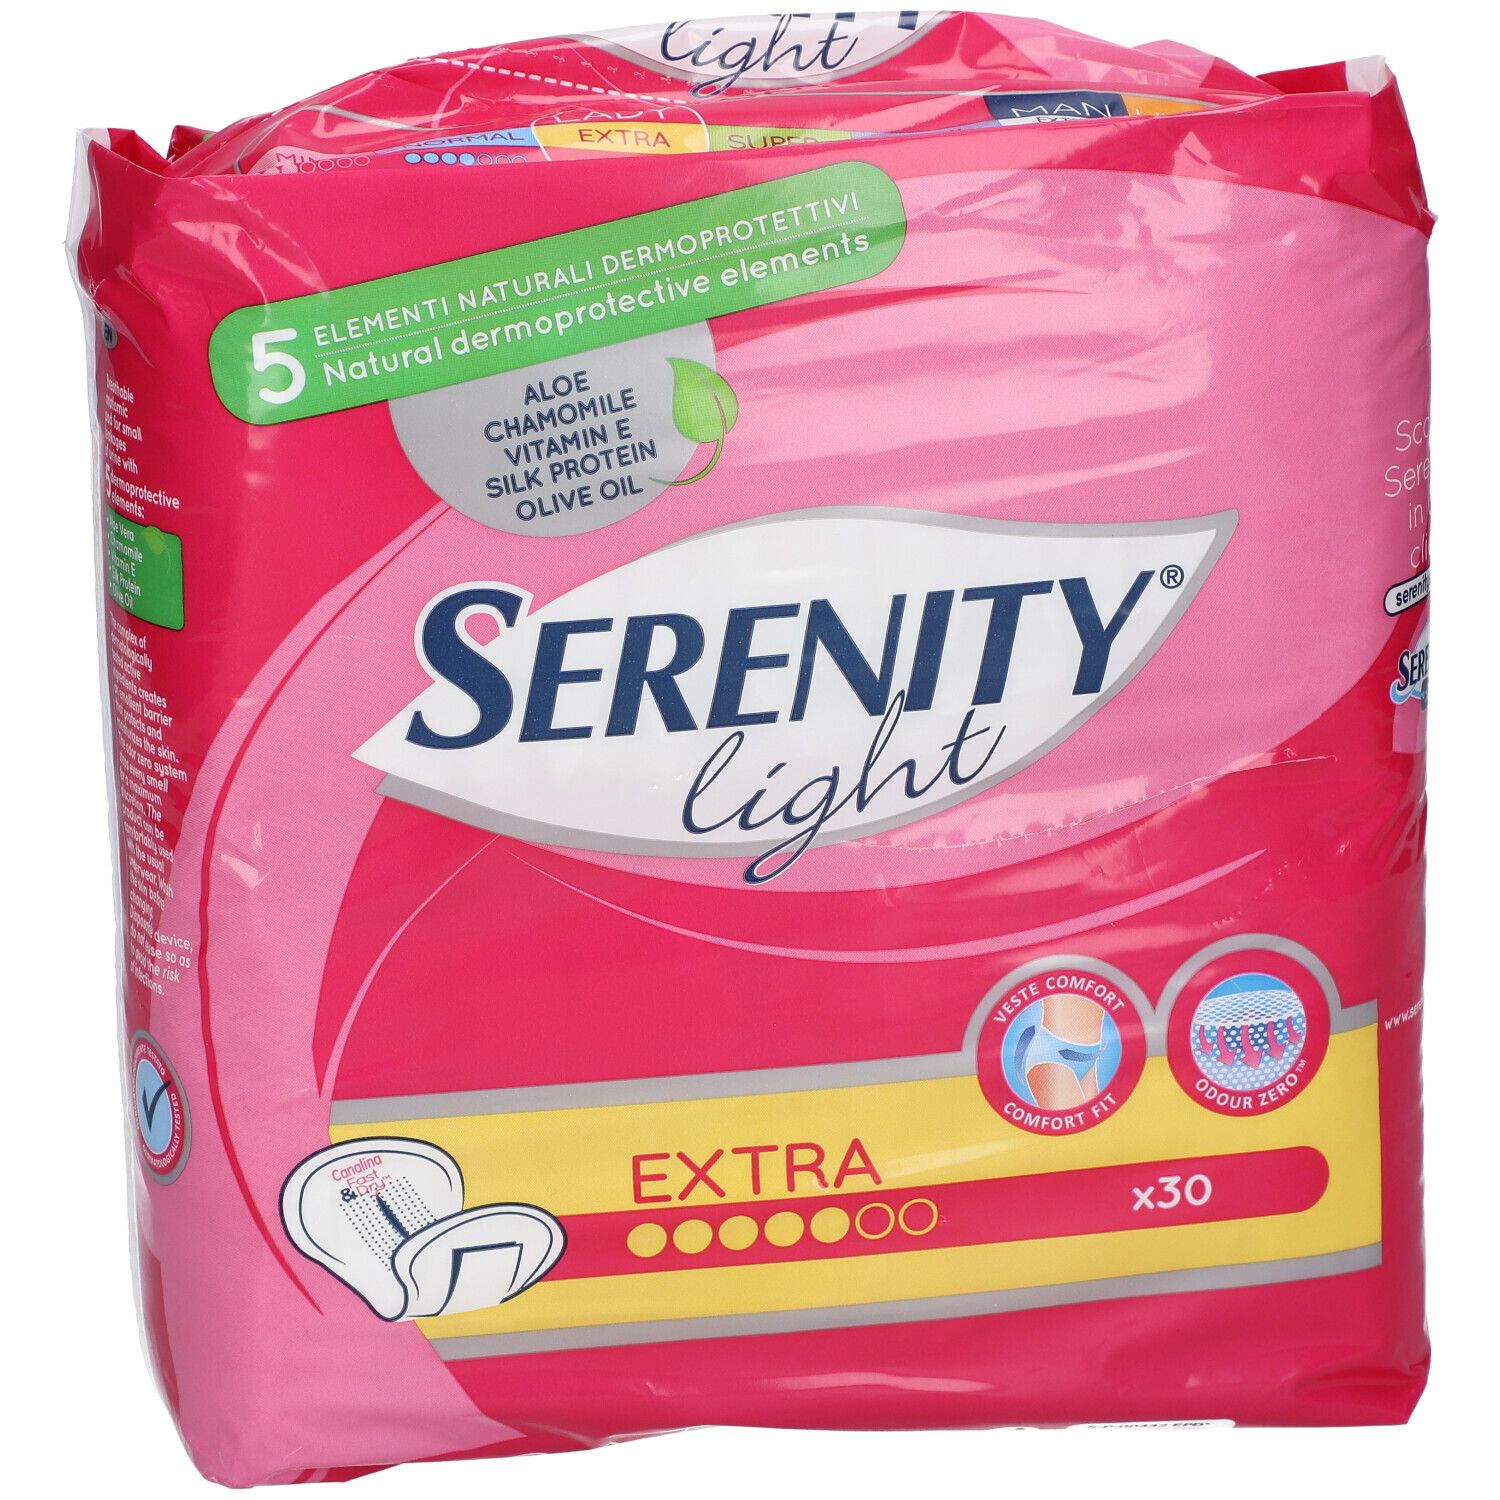 Serenity® Light Lady Extra